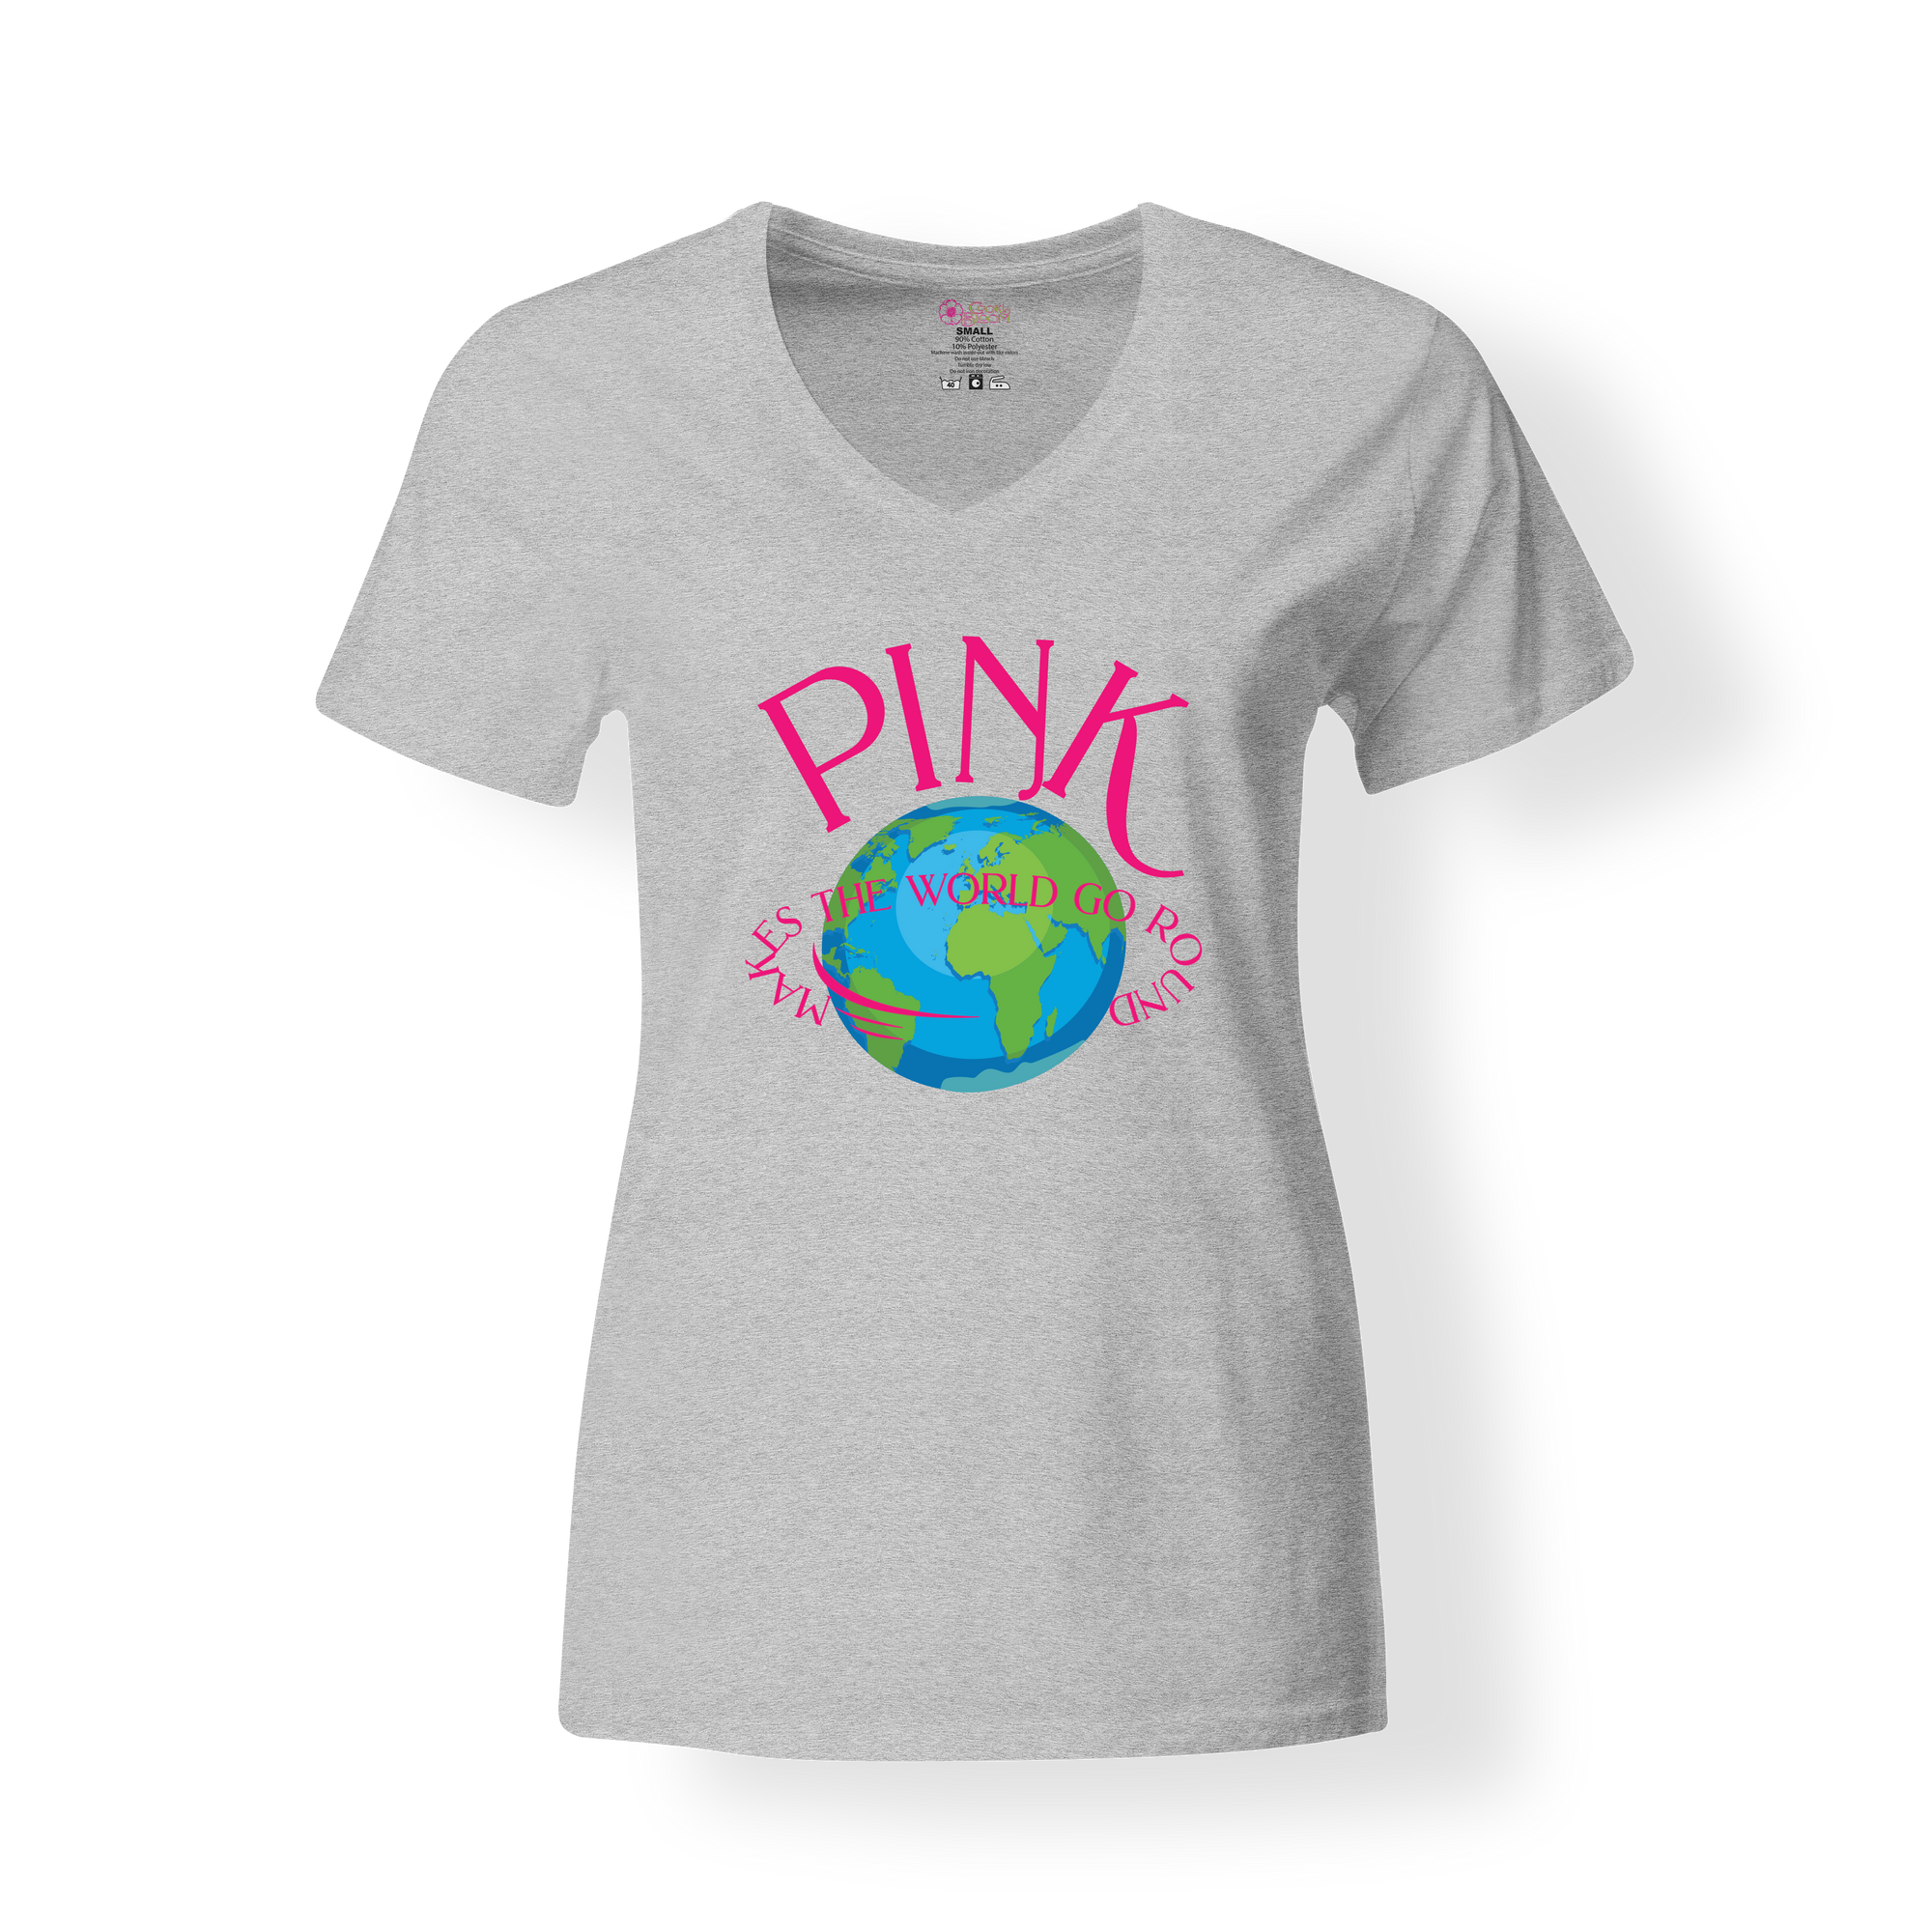 CookiBloom shirts S / Gray Pink World Shirt